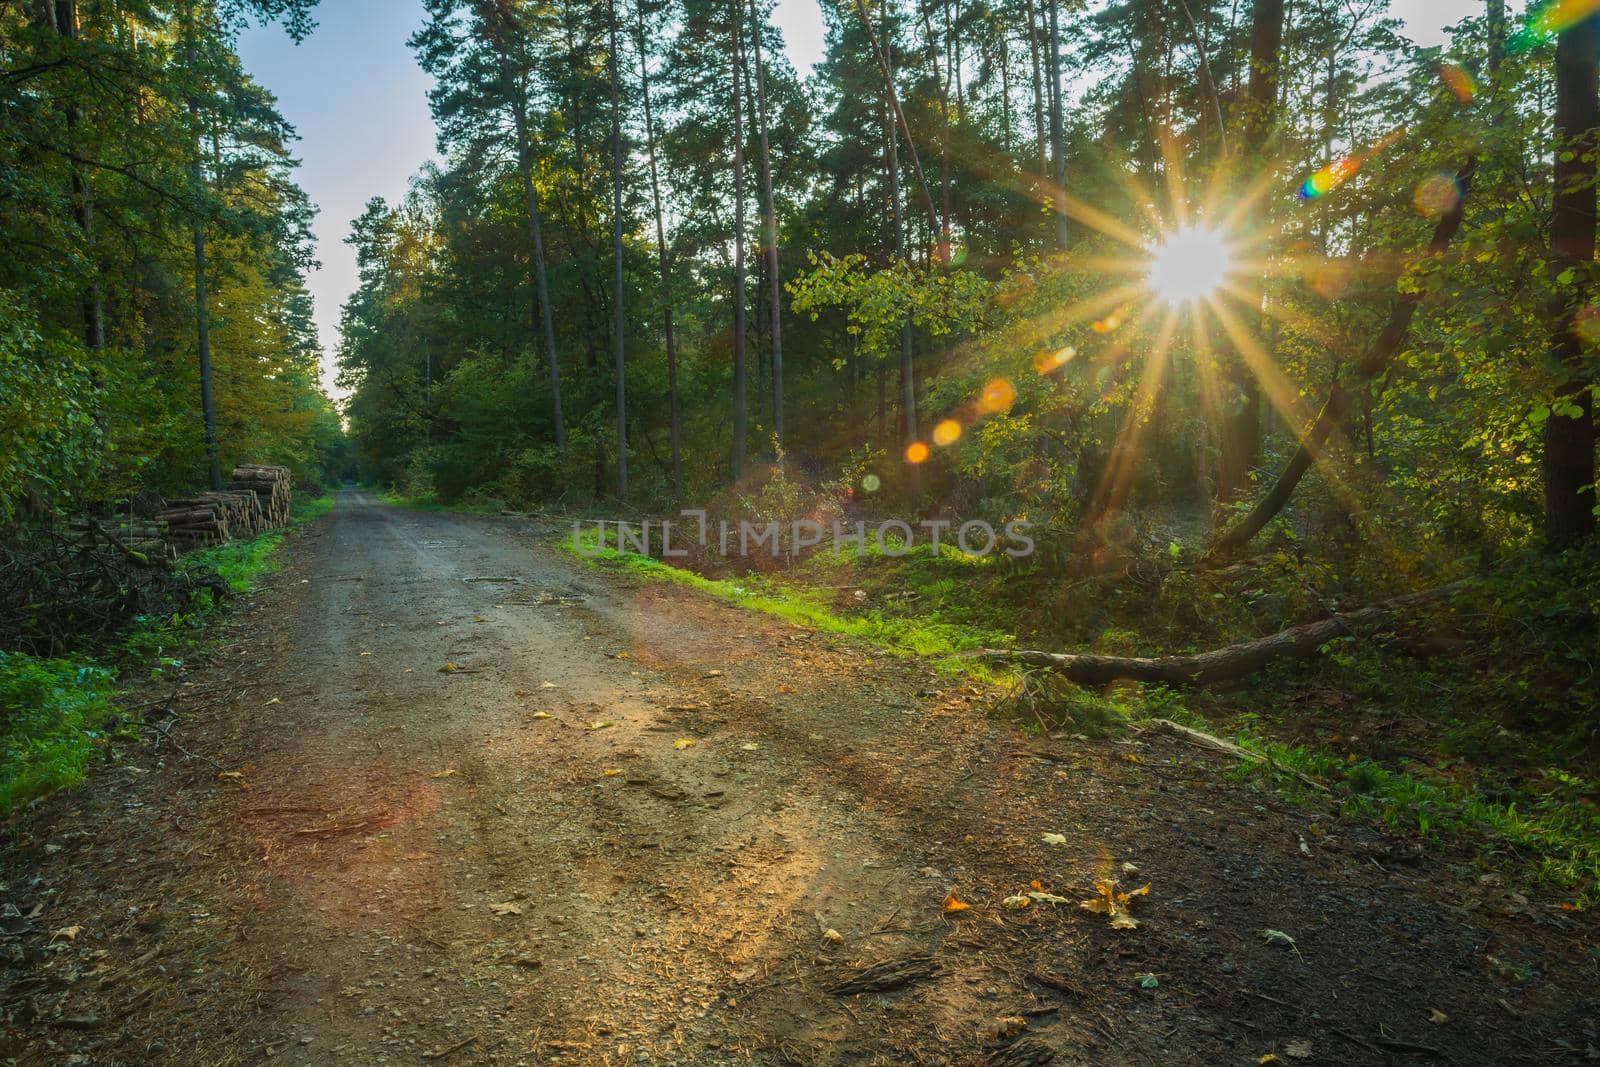 Sun star in dark forest with dirt road, idyllic woodland